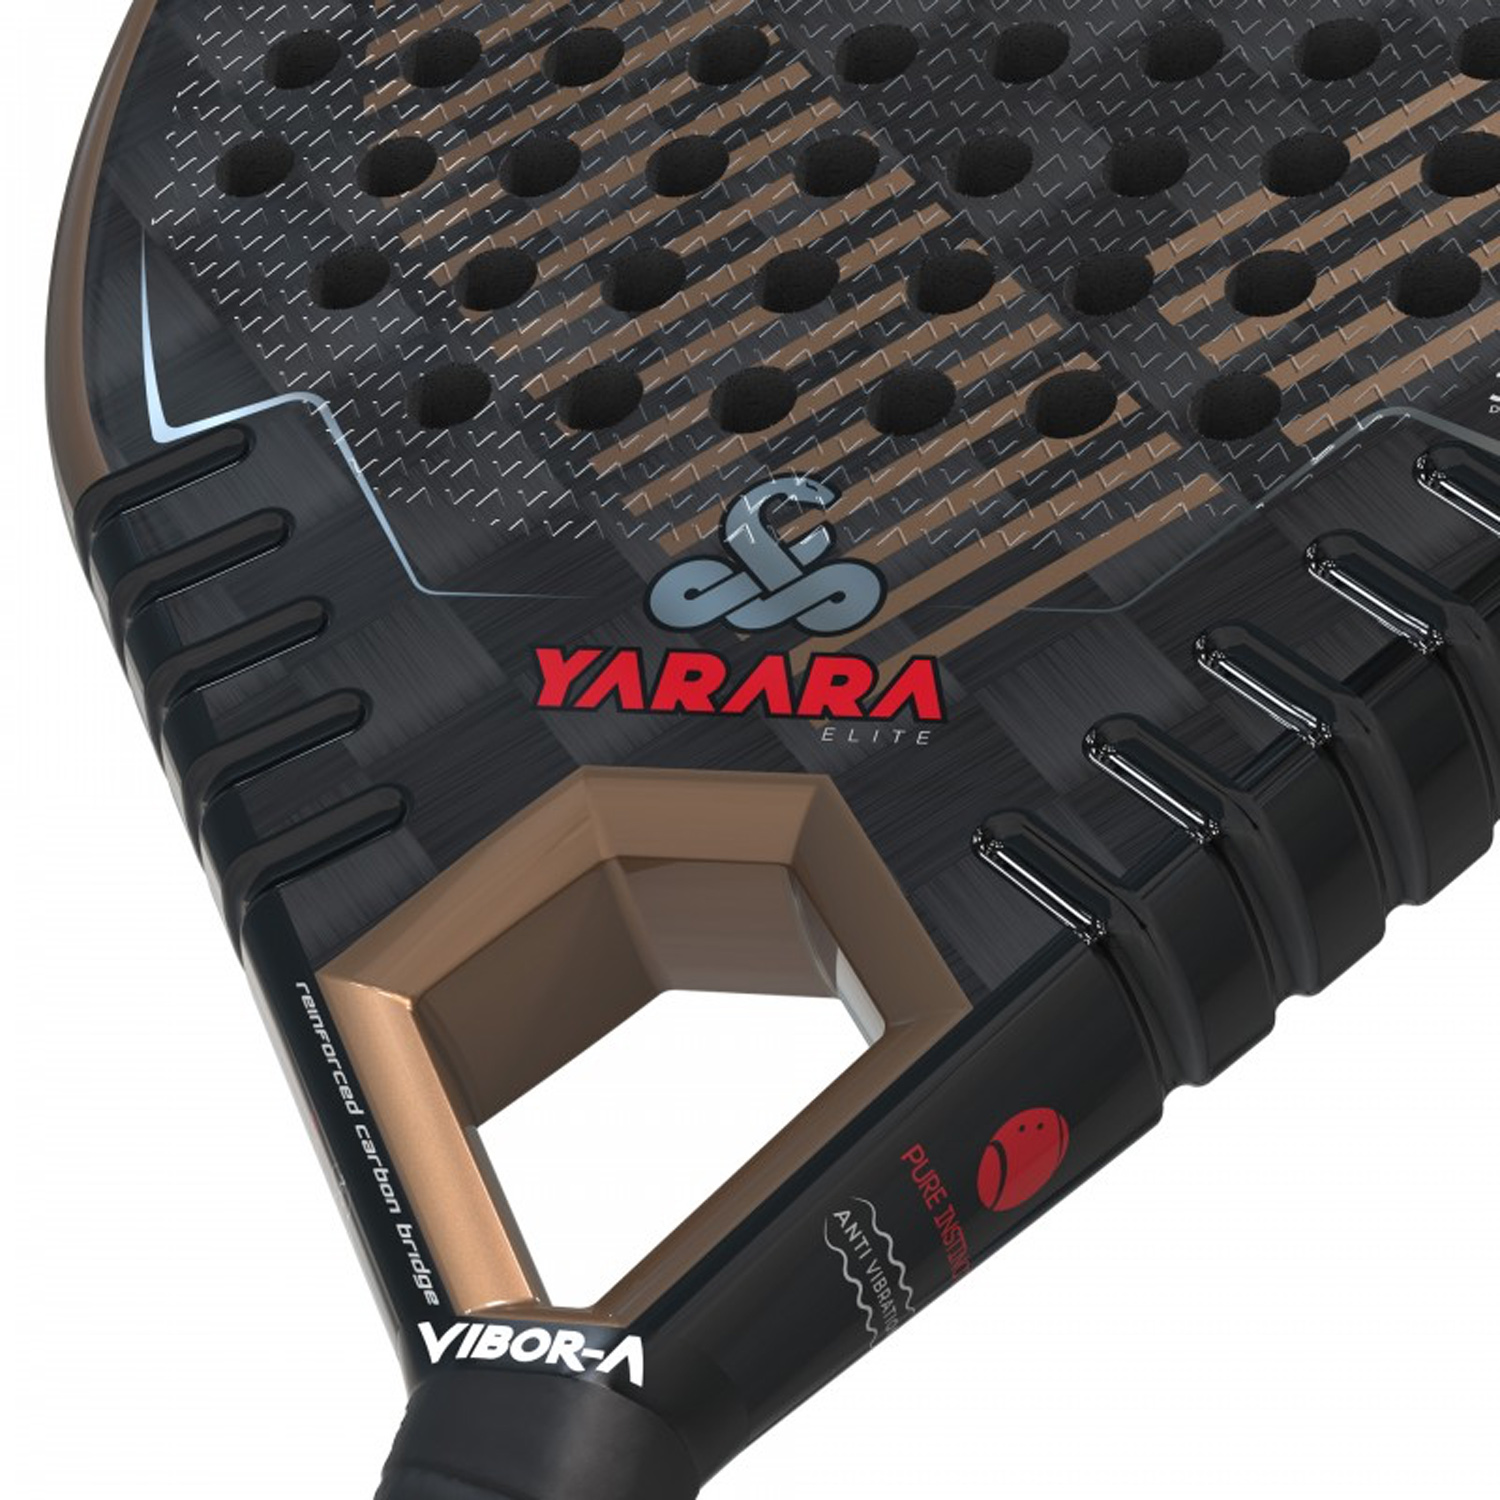 Vibor-A Yarara Elite 24K Padel - Black